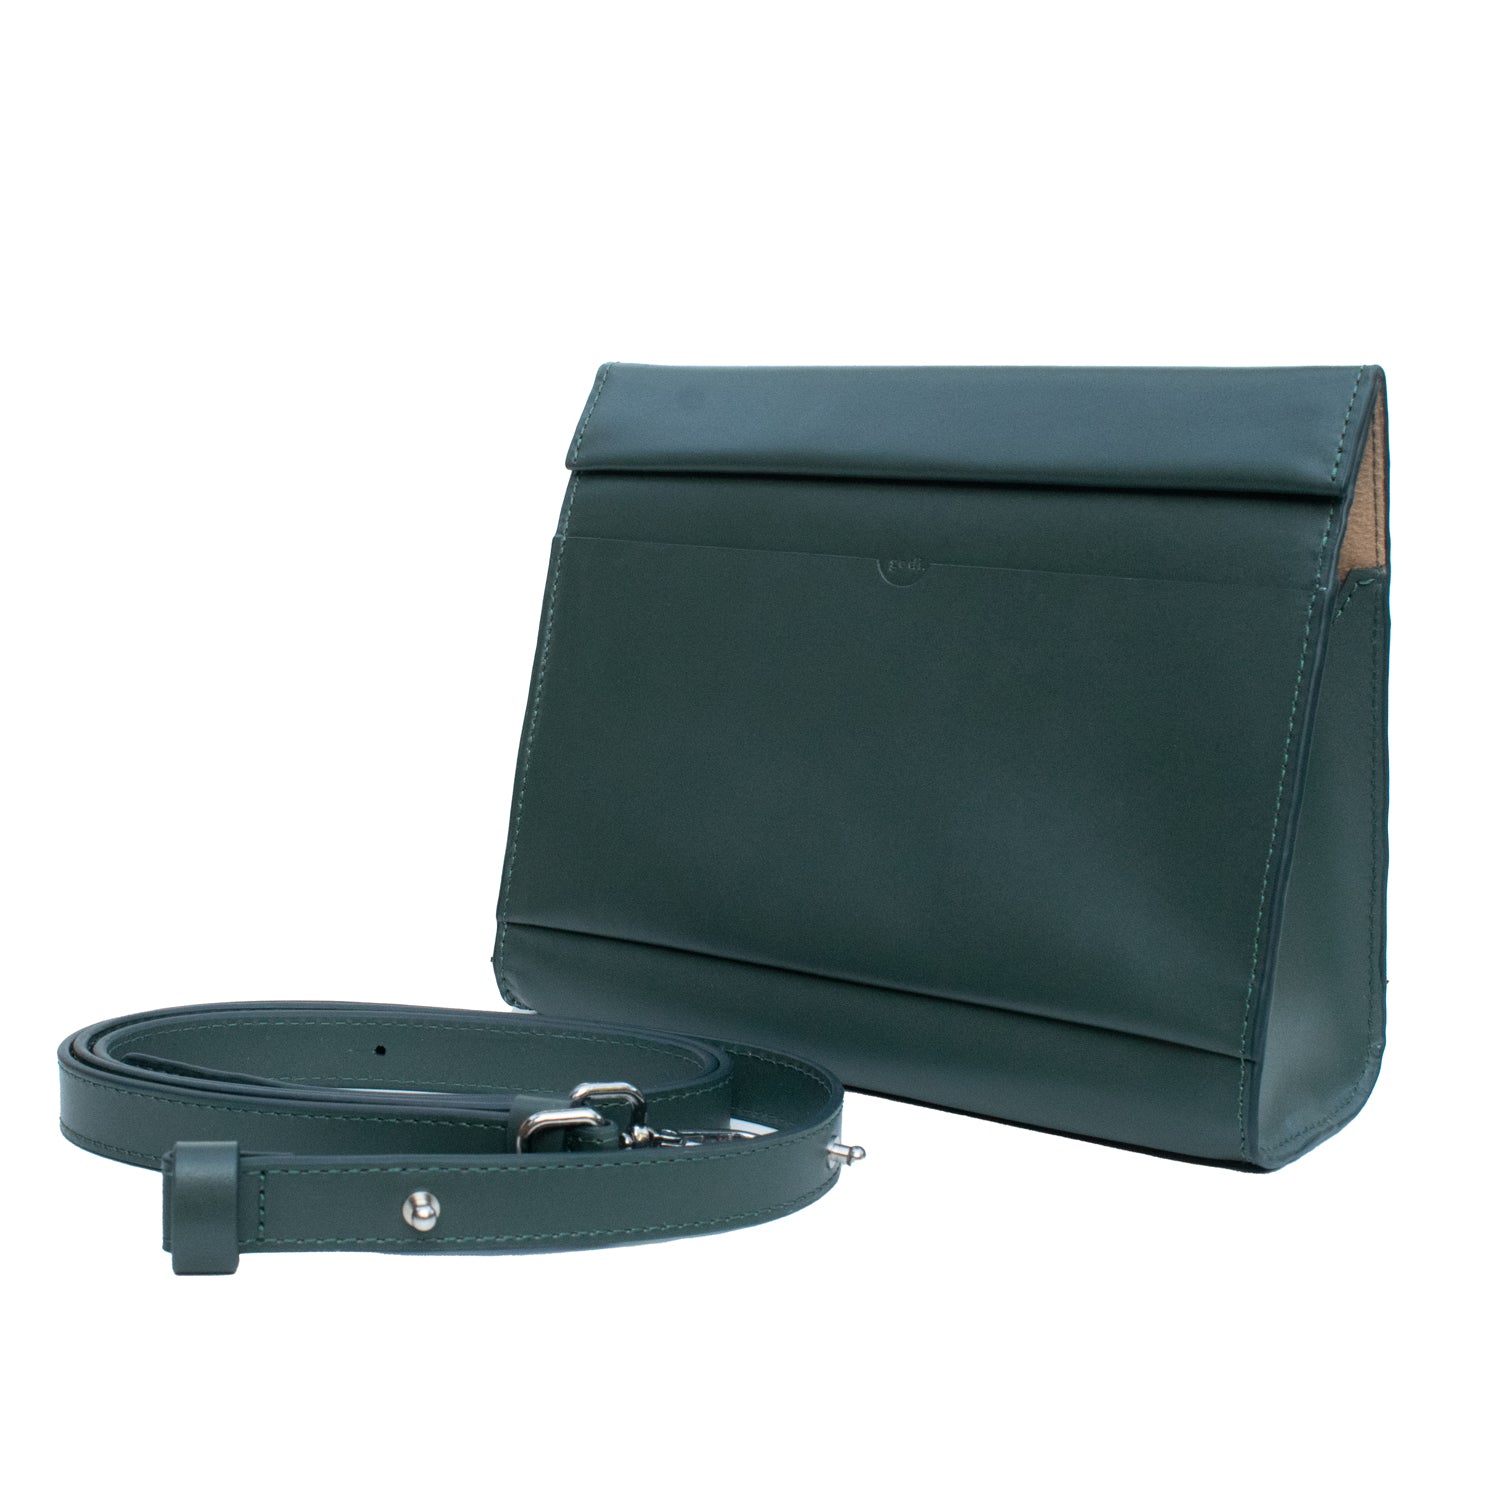 Mini Shoulder Bag in Dark Green